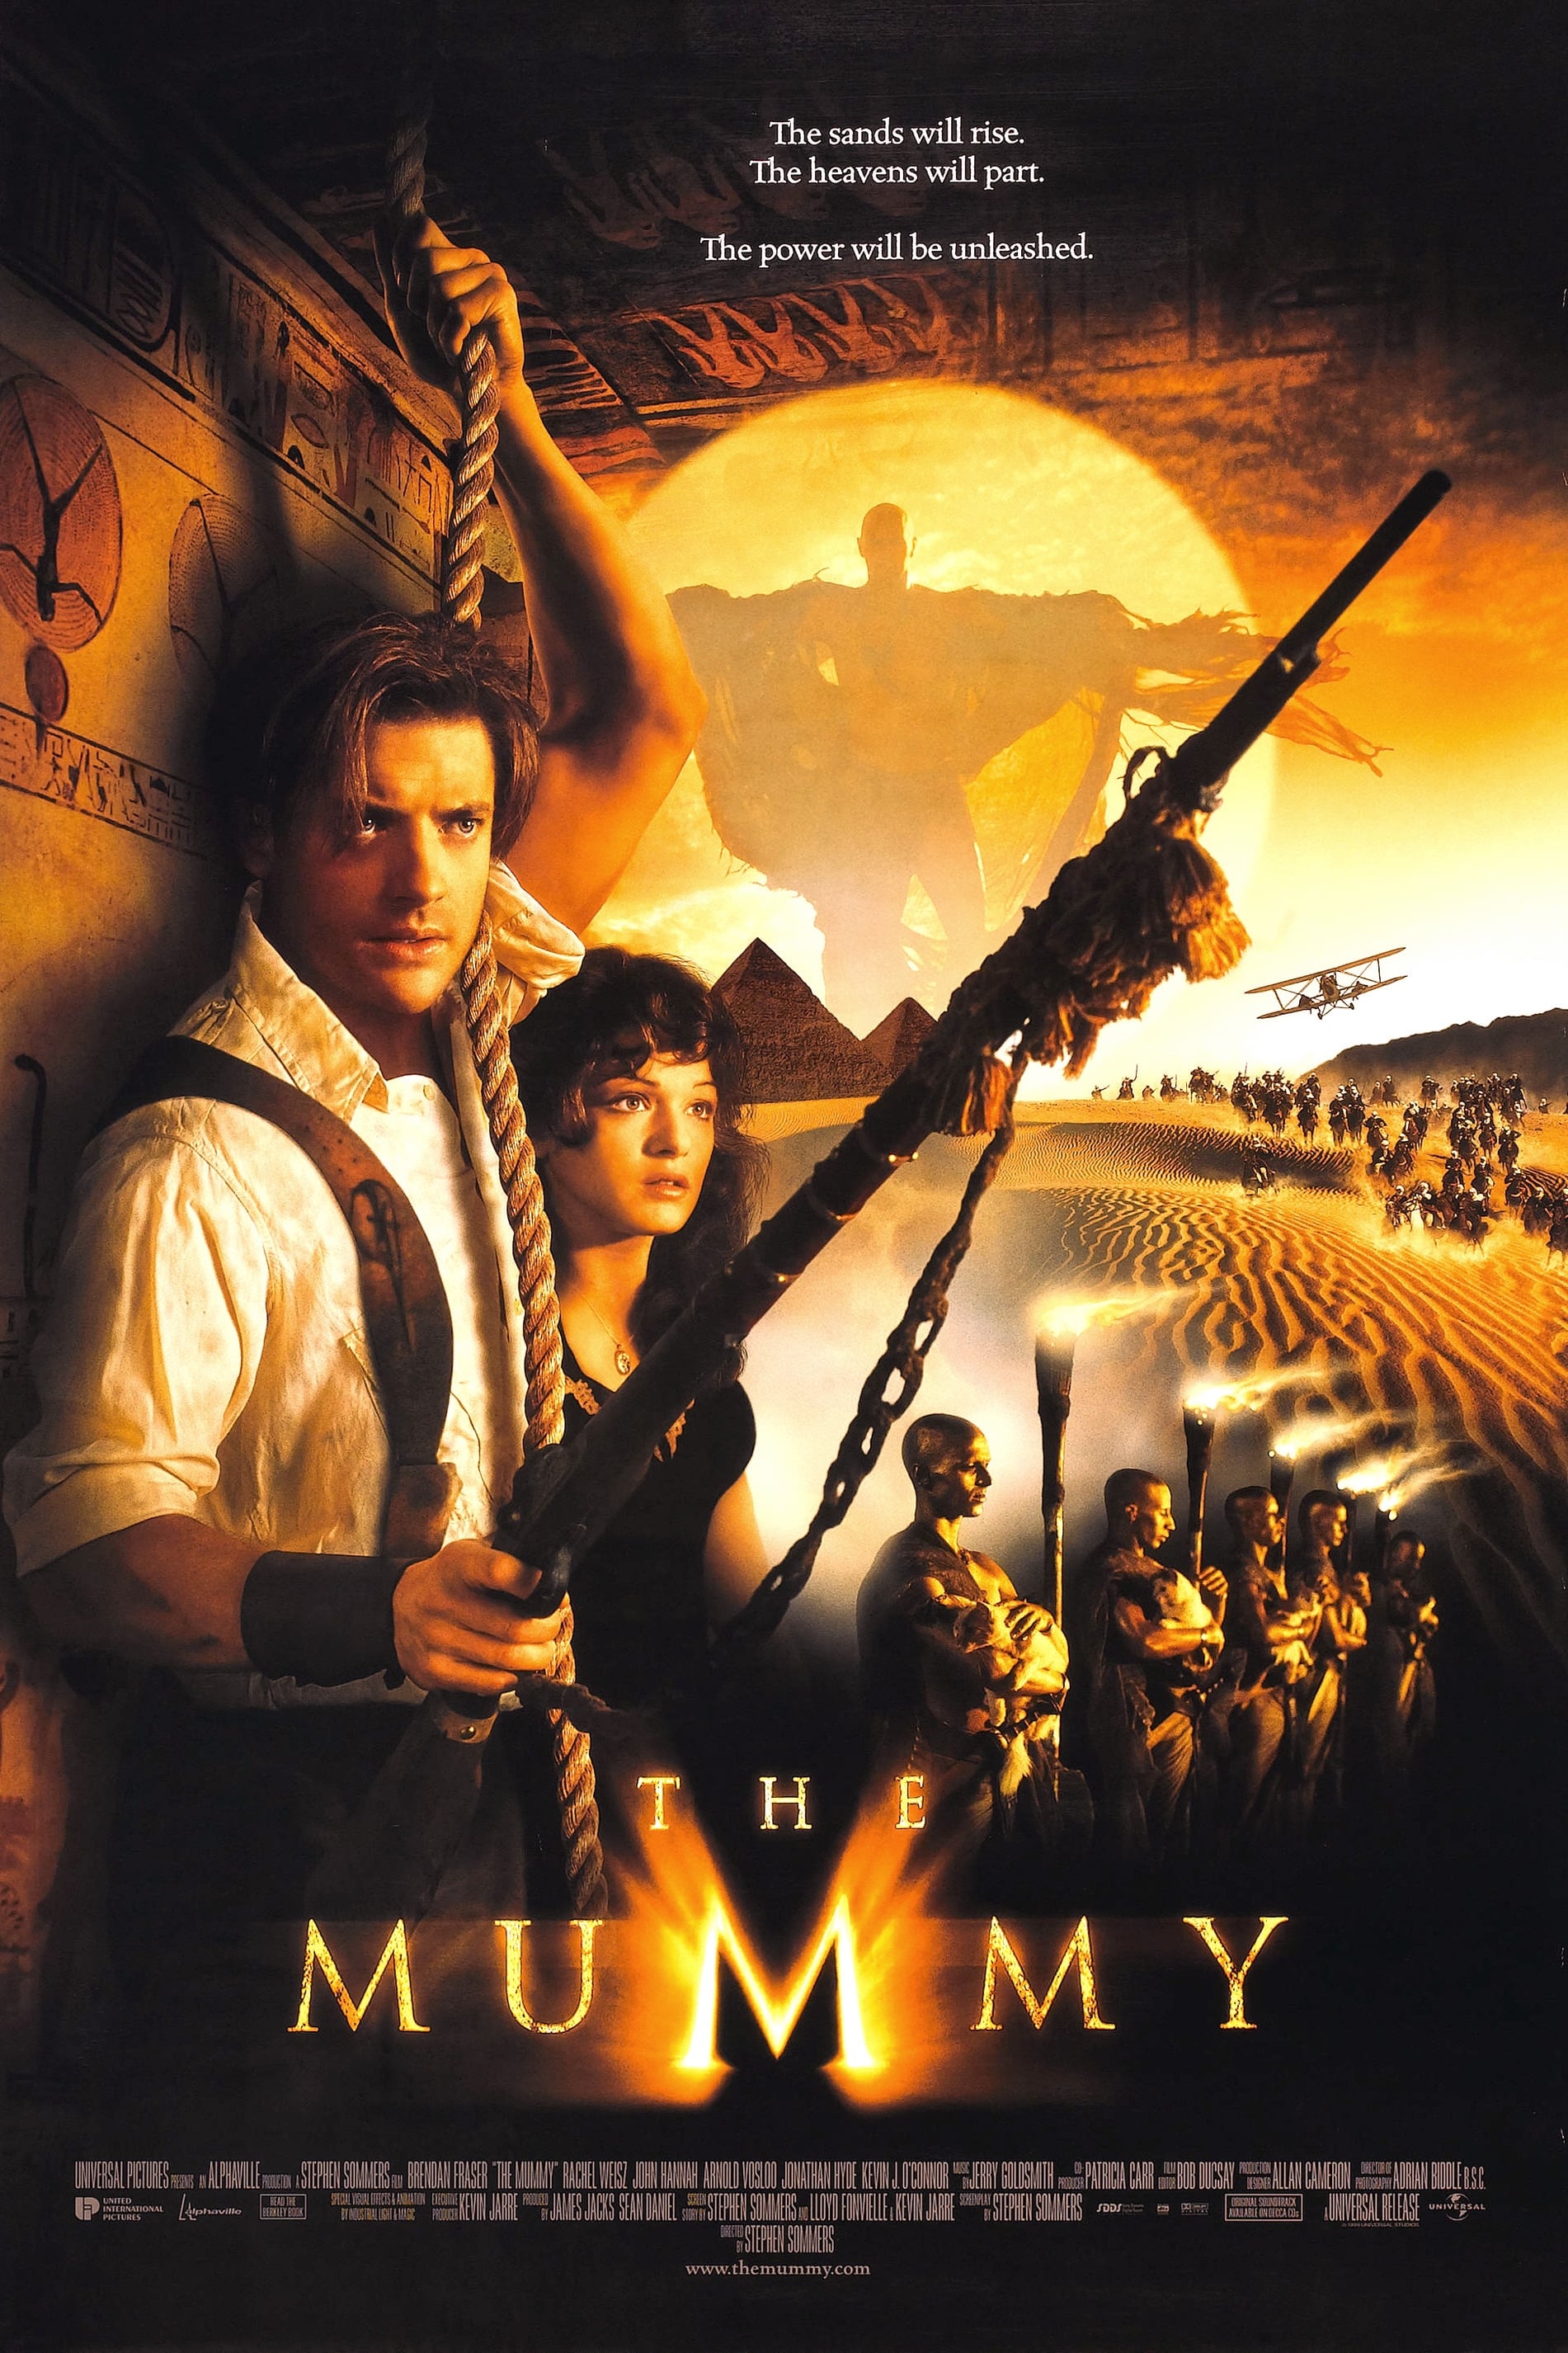 EN - The Mummy 1 (1999)